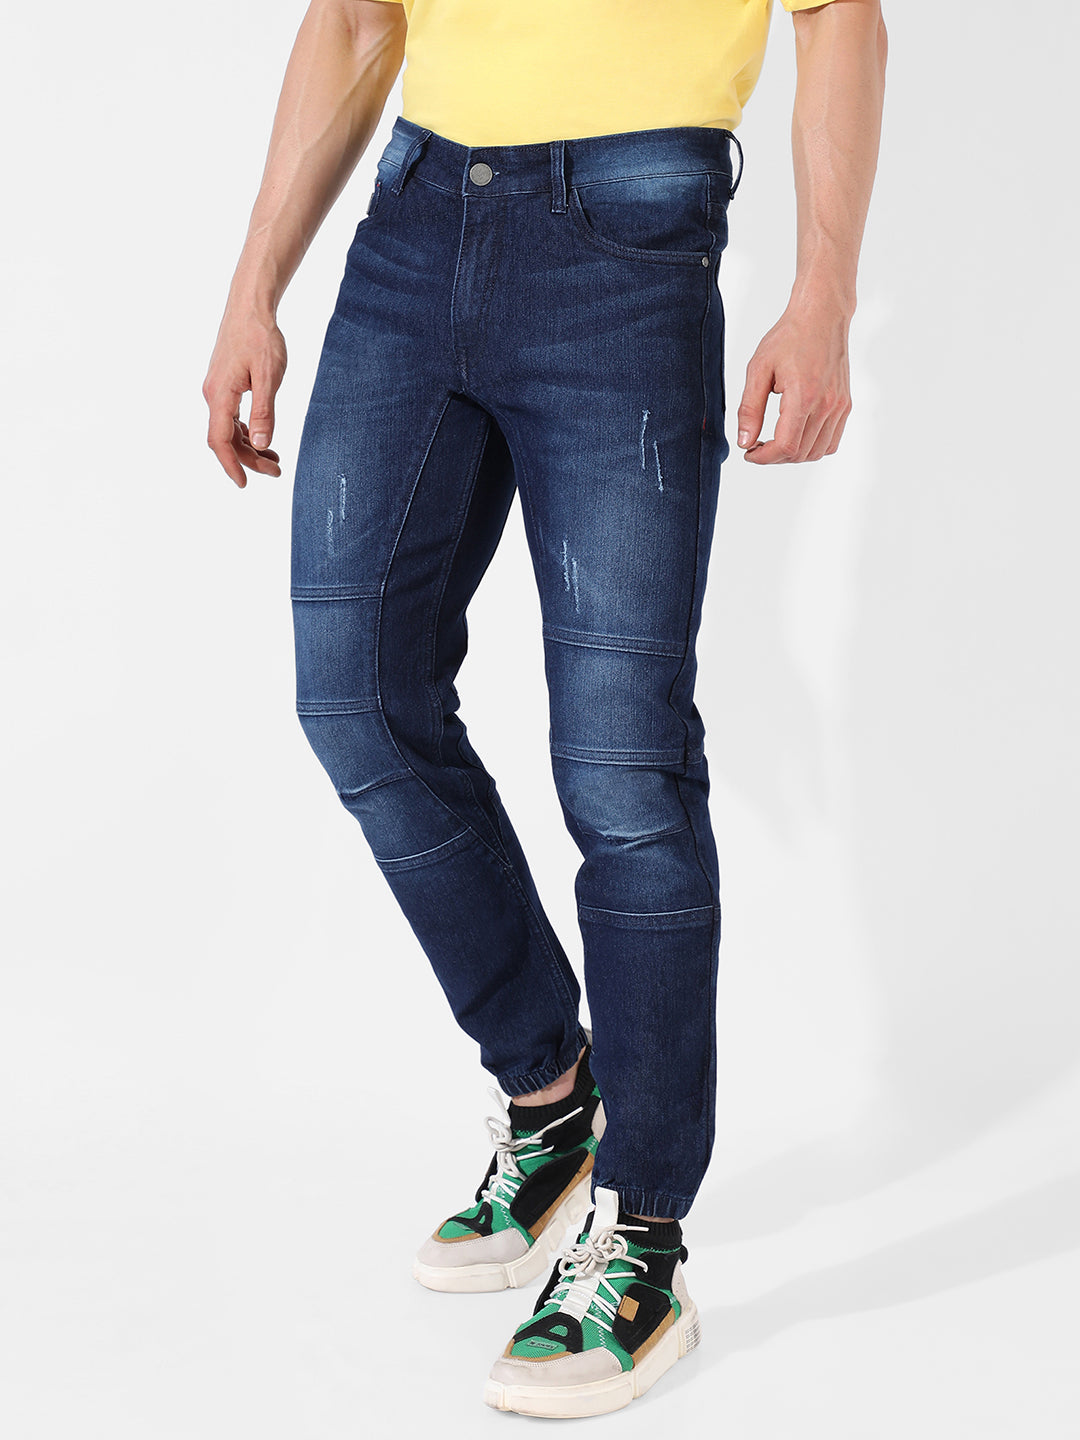 Self-Design Parallel Stitched Denim Jeans